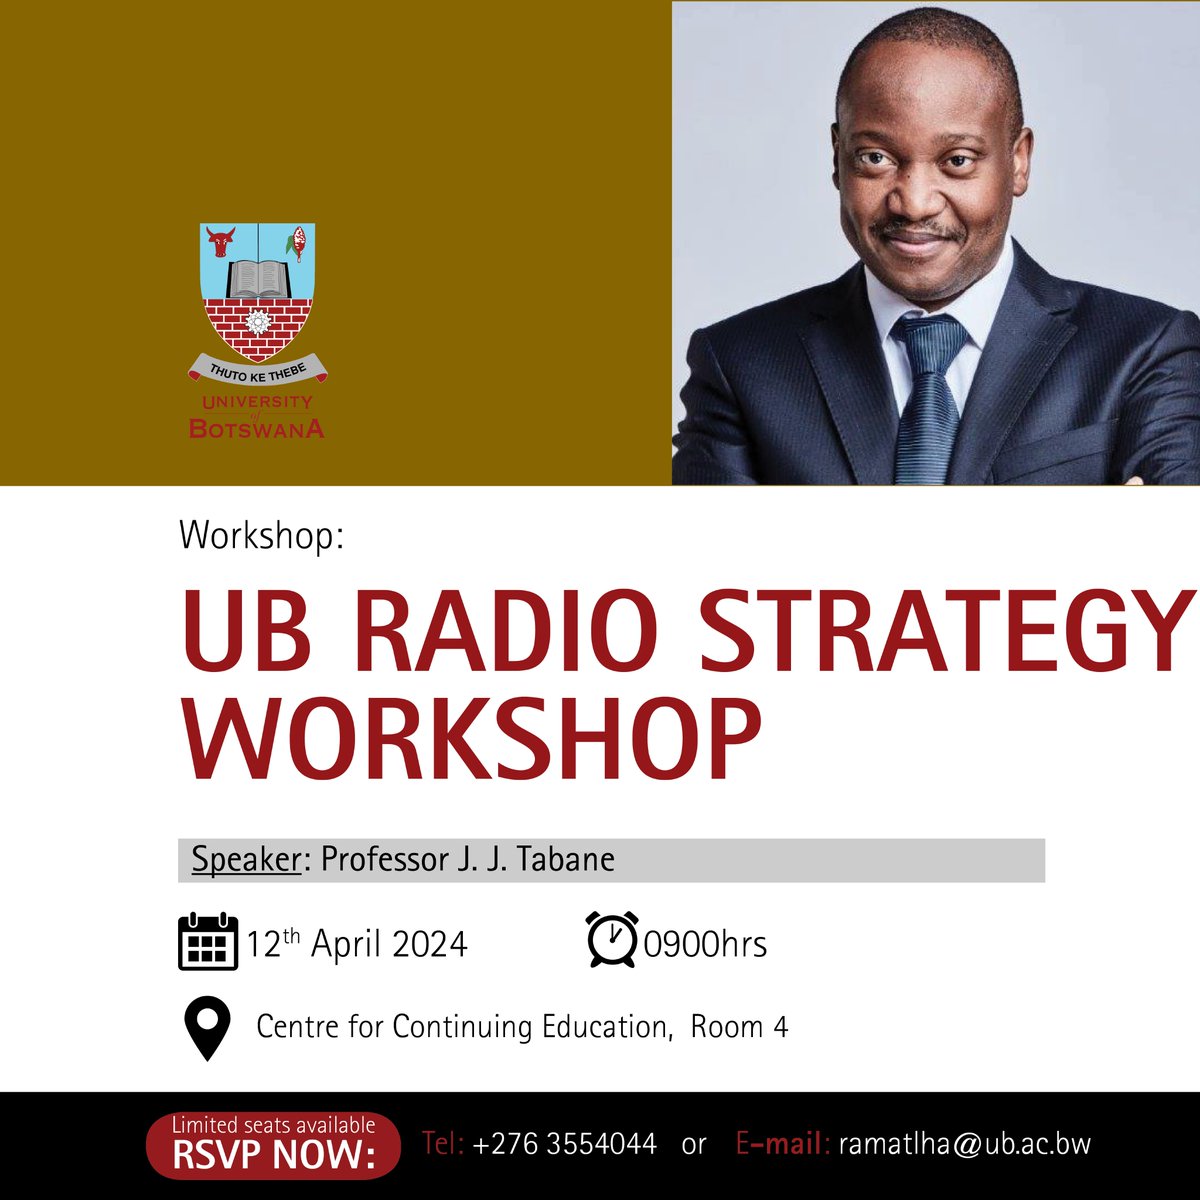 #Workshop #April12 UB RADIO STRATEGY WORKSHOP #Mmadikolo #CentreOfAcademicExcellence